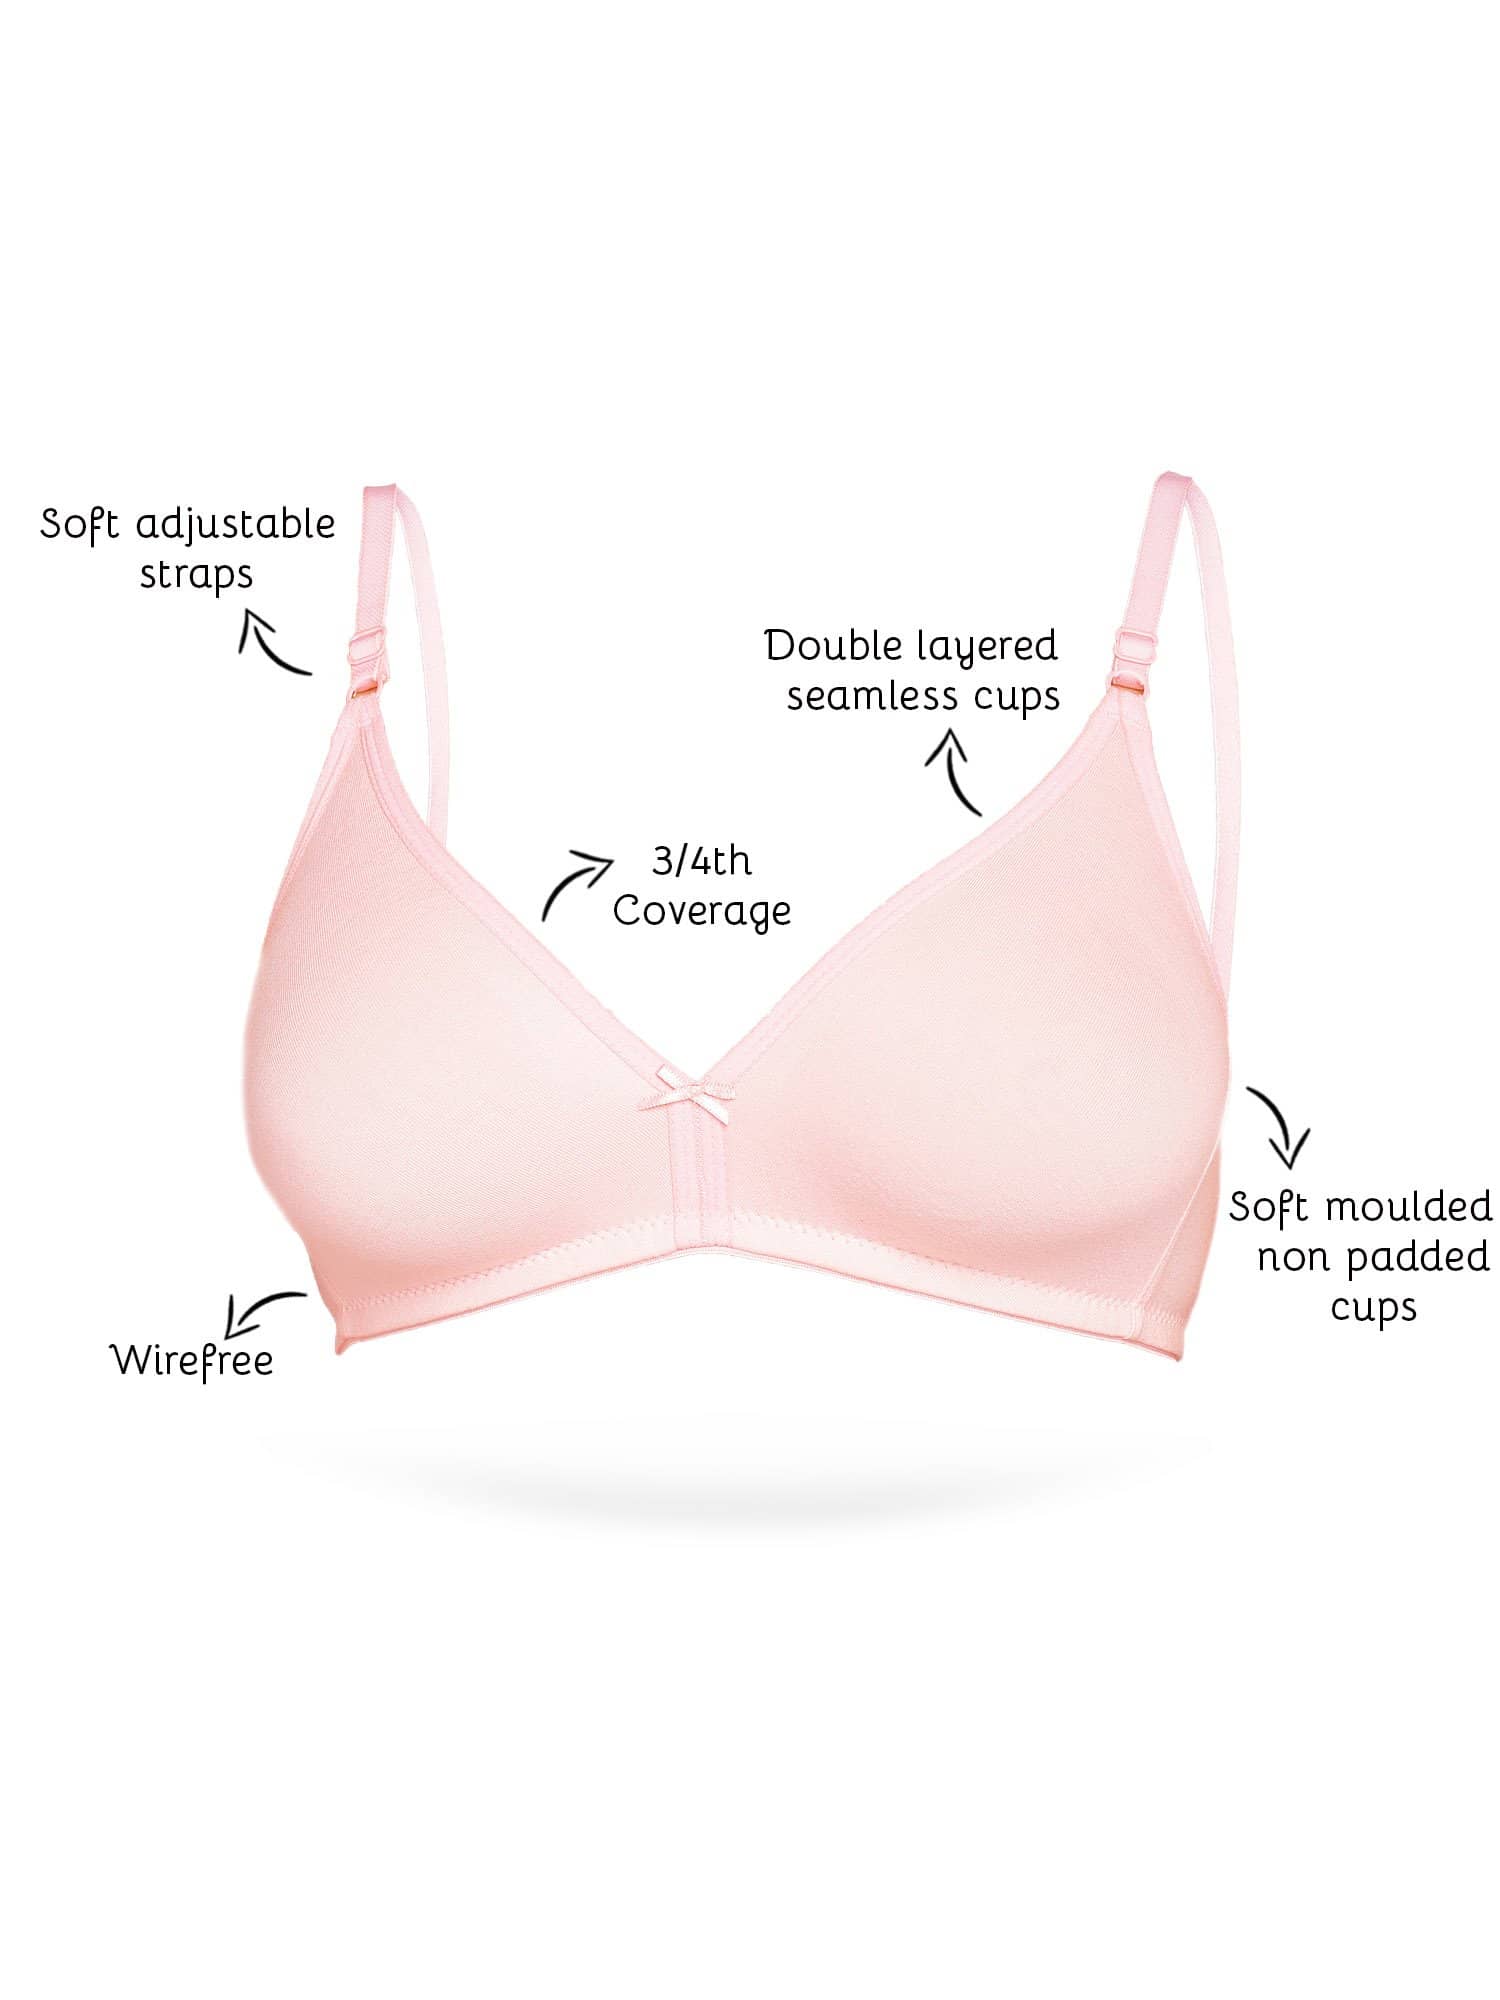 Buy Baby Pink Bras for Women by Inner Sense Online